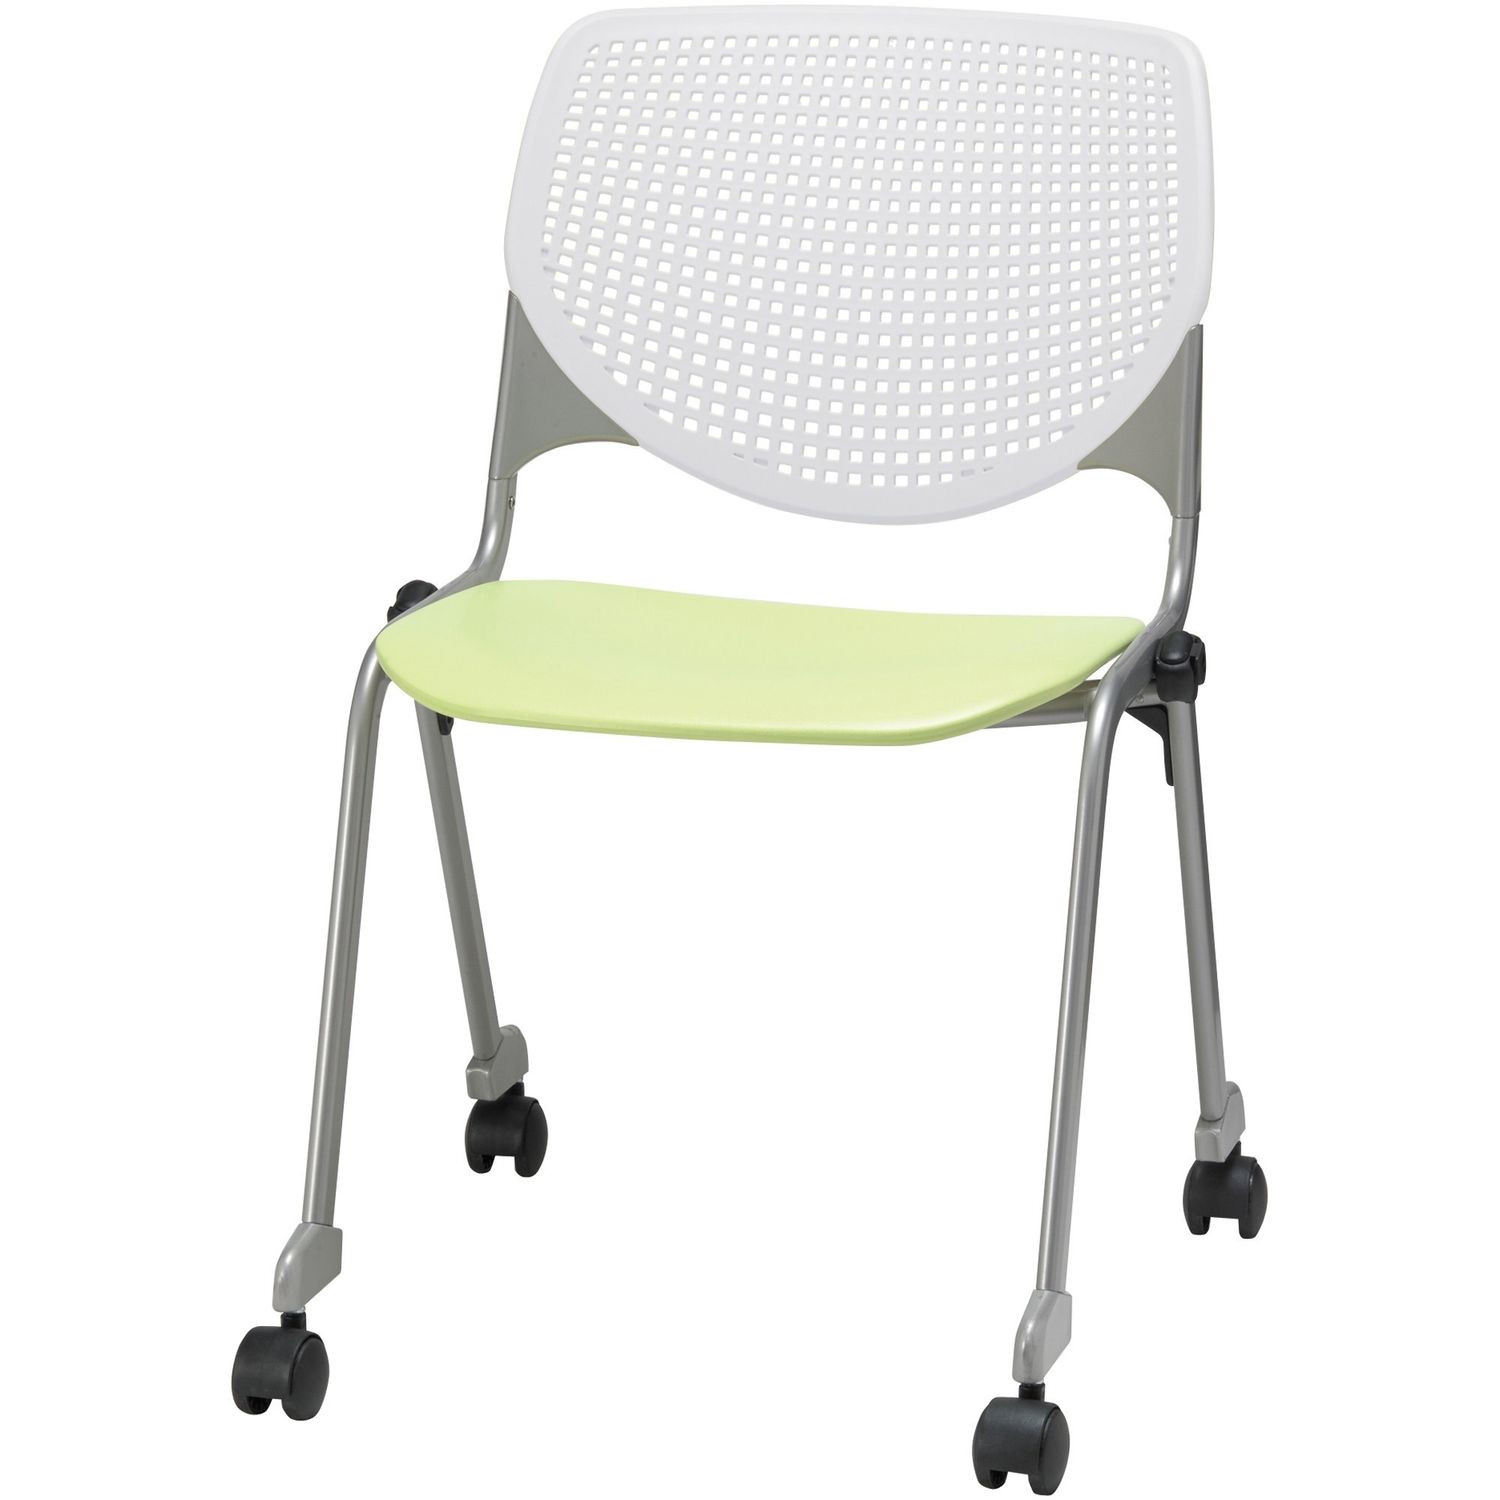 Kool Caster Chair-Perforated Back Lime Green Polypropylene Seat, White Polypropylene, Aluminum Alloy Back, Powder Coated Silver Tubular Steel Frame, 1 Each